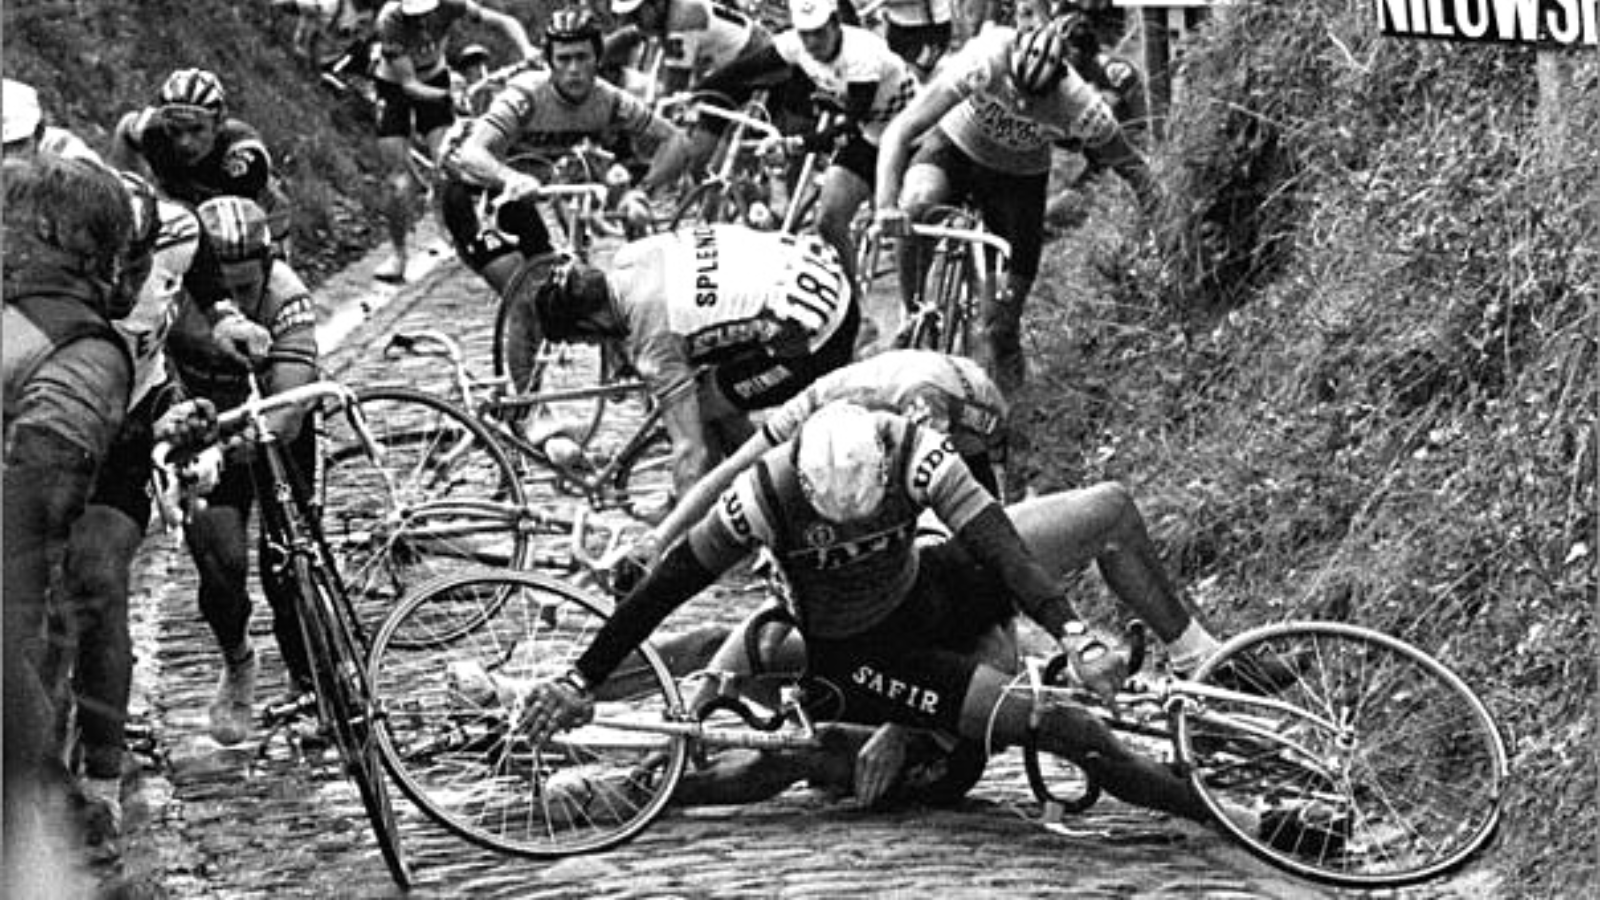 A huge crash on the Koppenberg, riders are stumbling upon eachother at the Ronde van Vlaanderen in the 1980s.